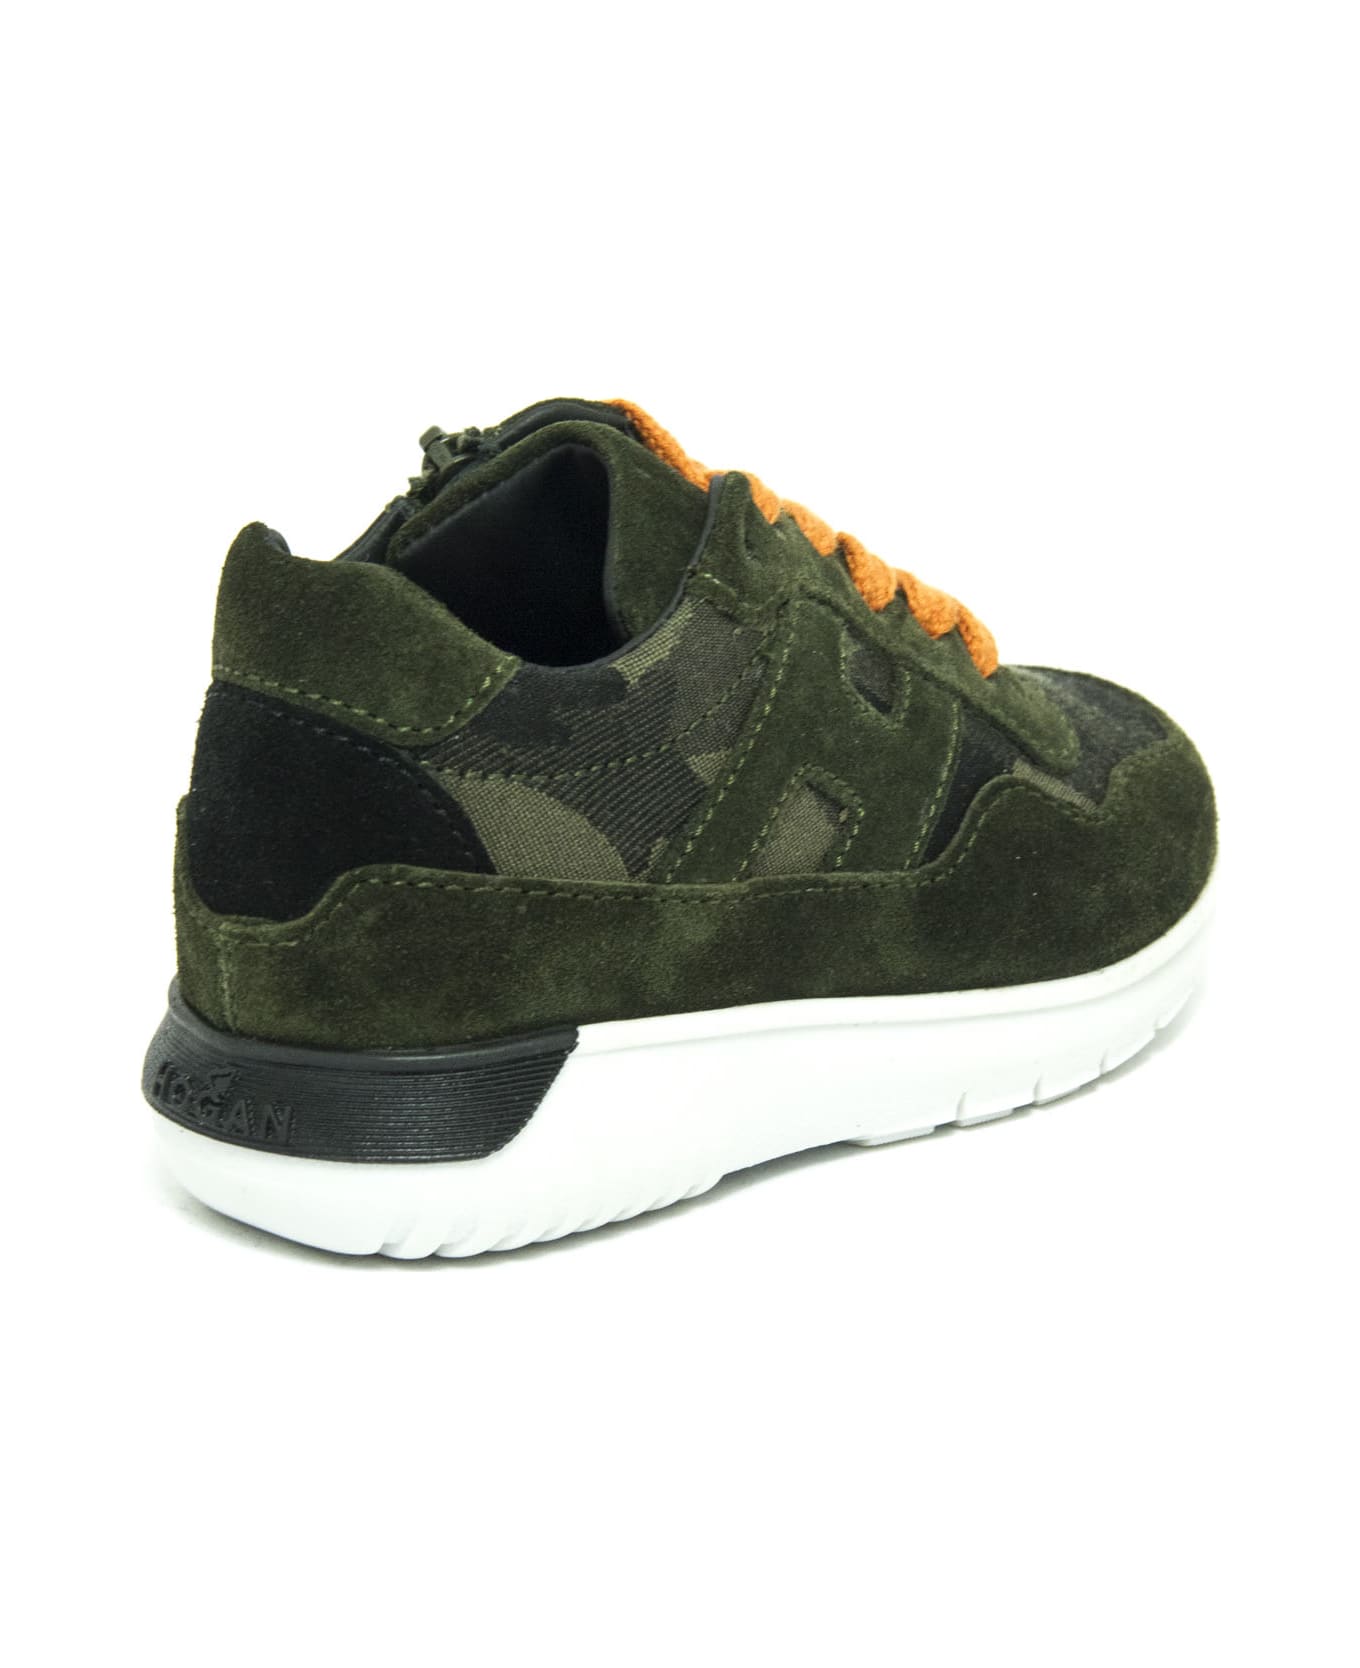 Hogan Sneakers In Green Suede - Camouflage